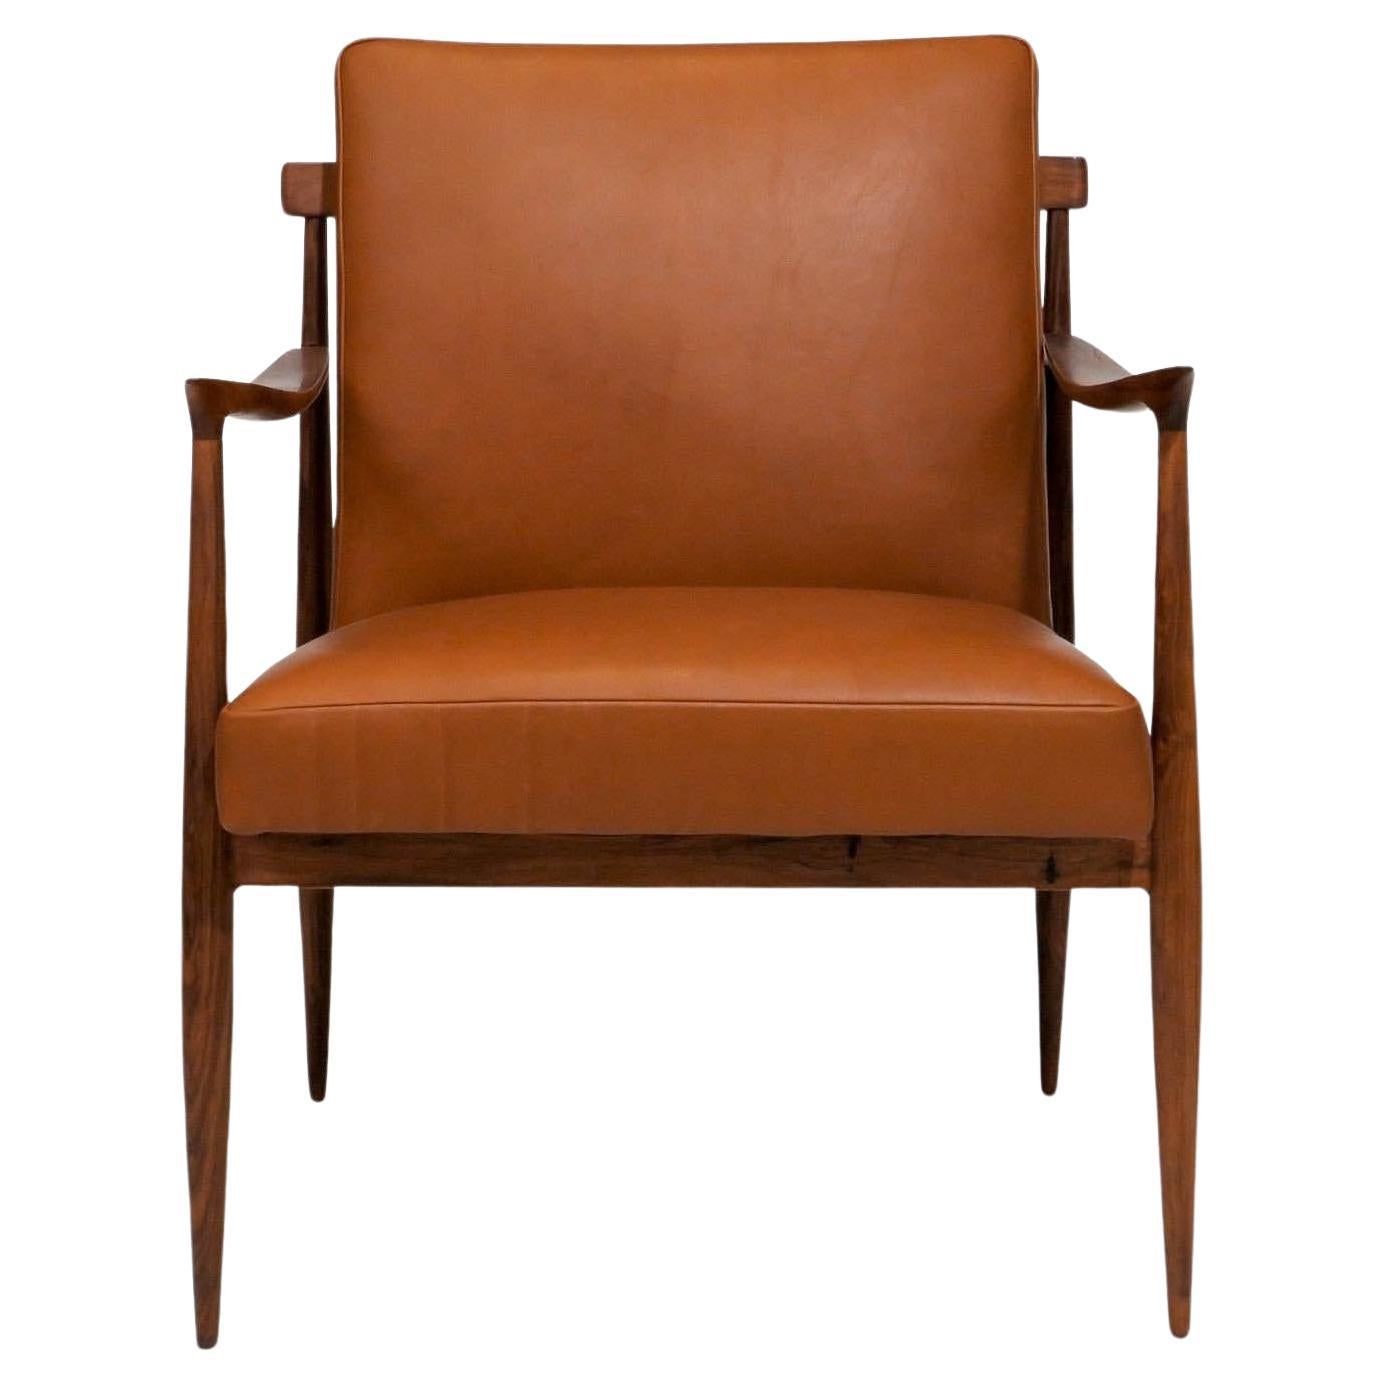 Giuseppe Scapinelli fauteuil de salon moderne brésilien en cuir et caviuna